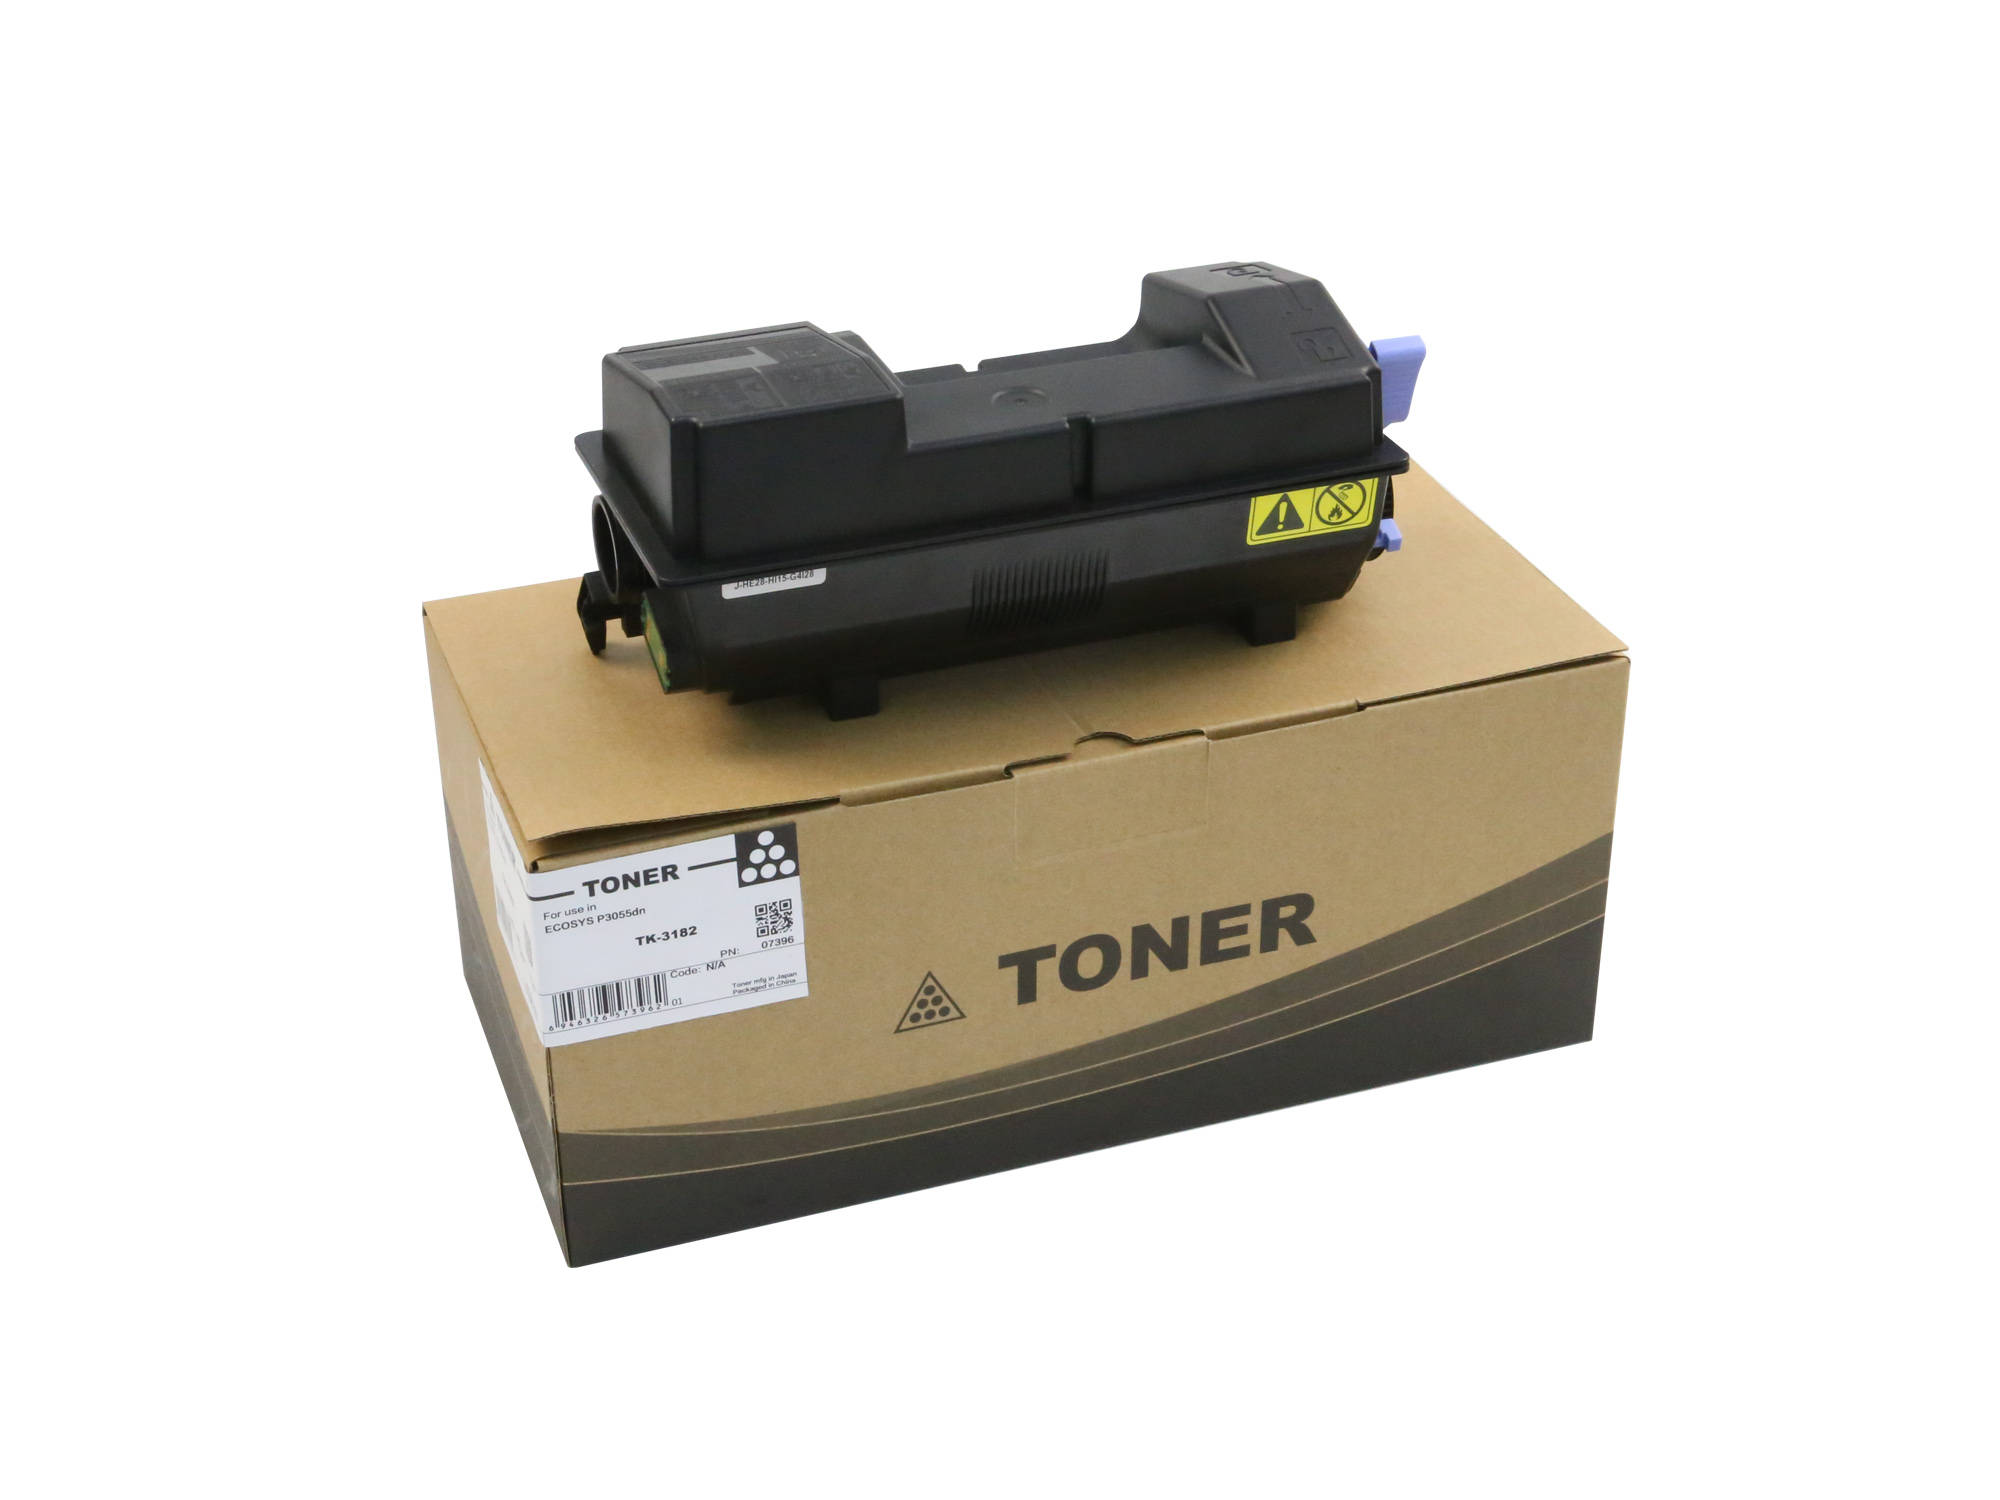 TK-3182 Toner Cartridge for Kyocera ECOSYS P3055dn